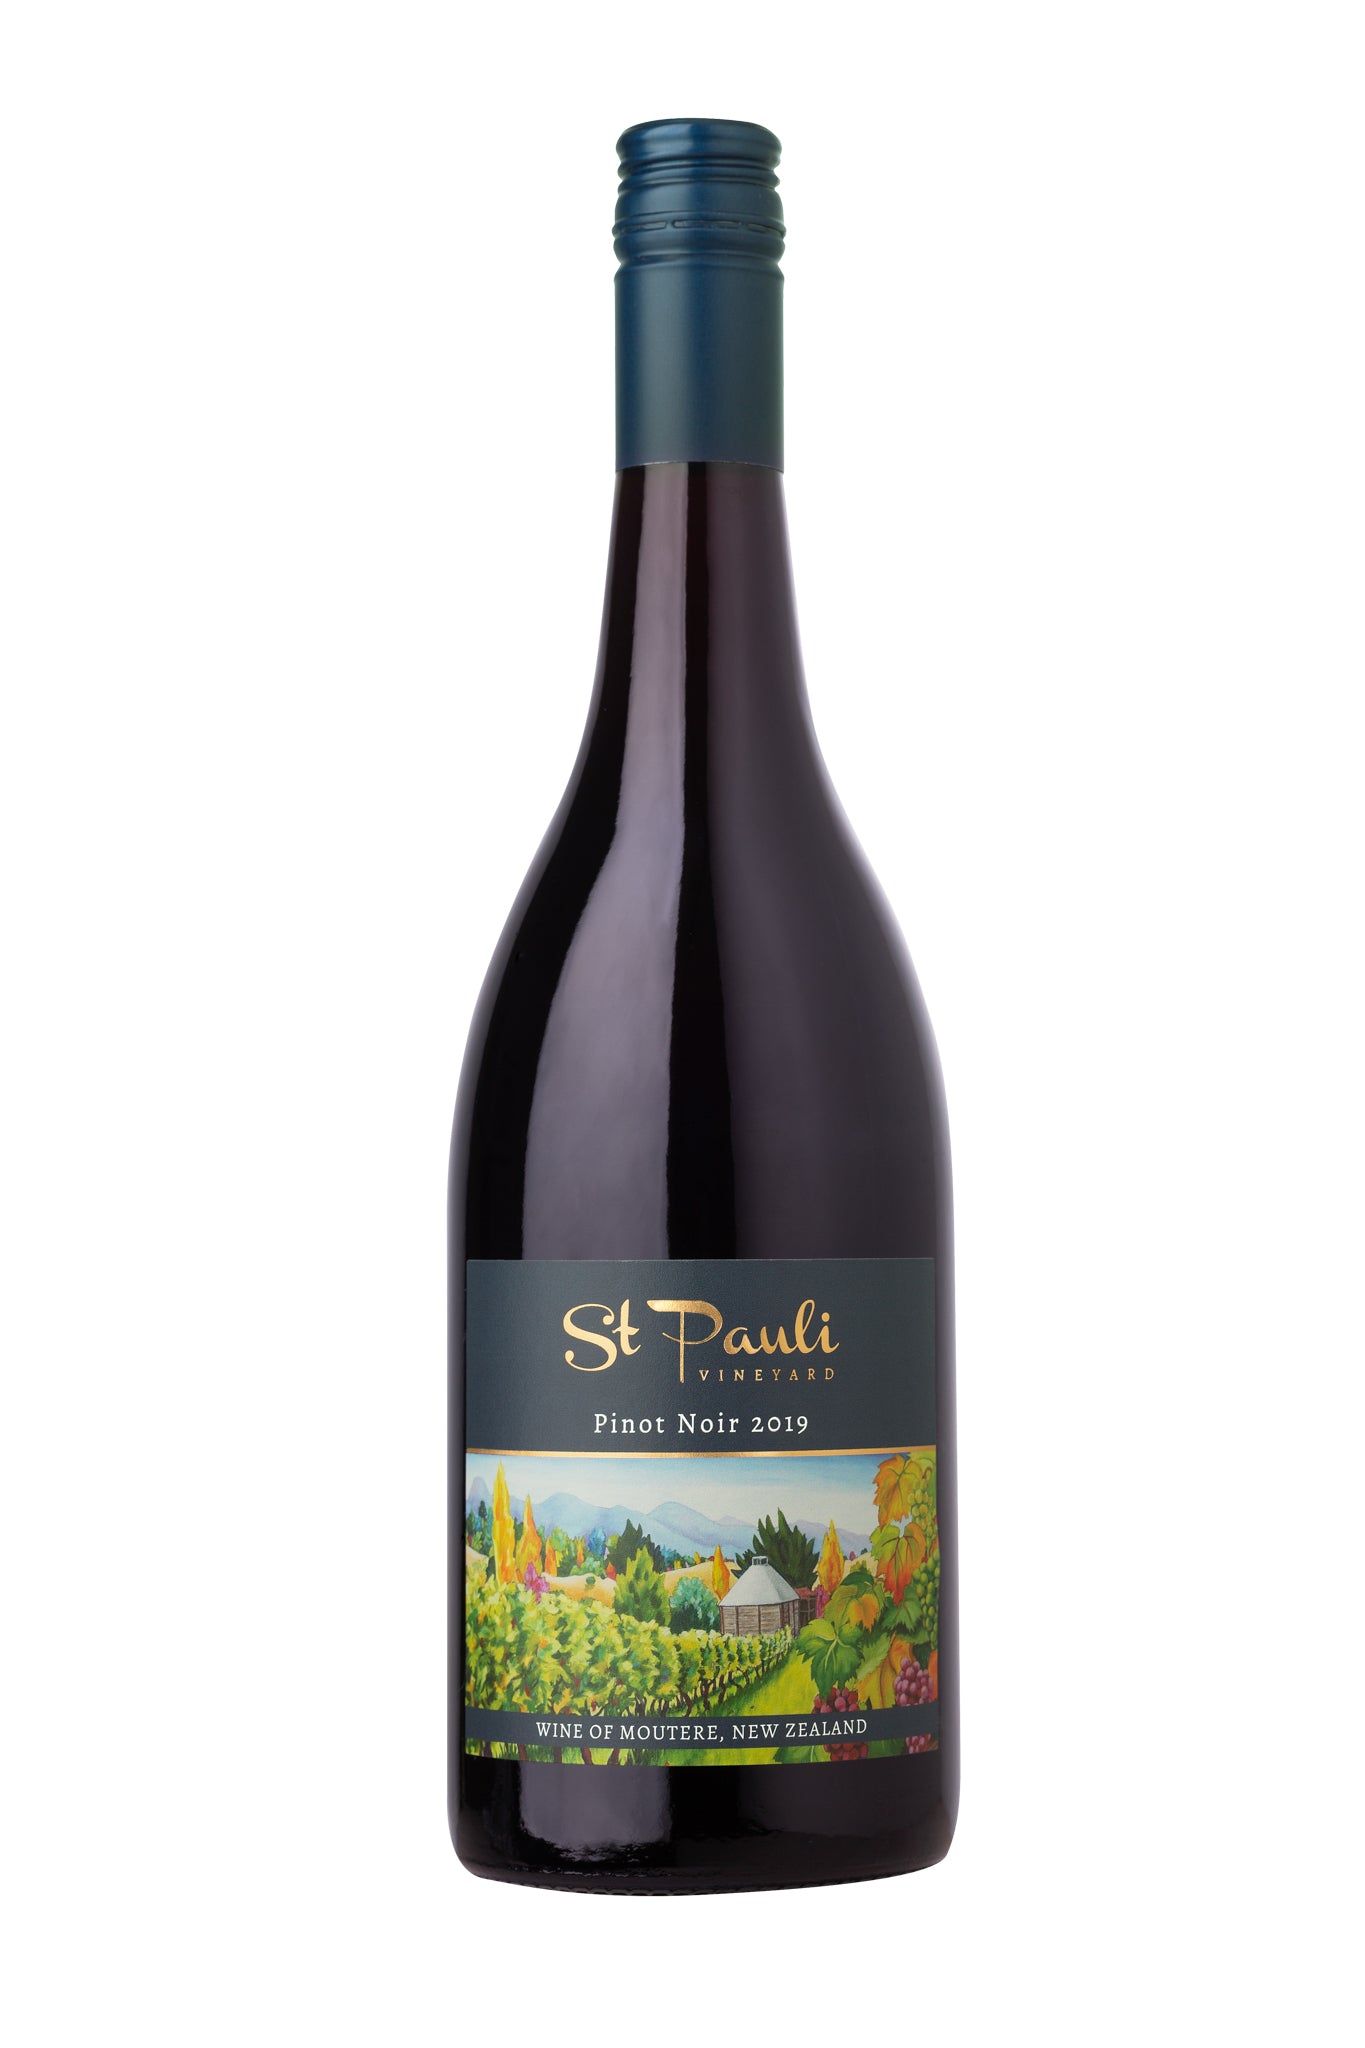 Noir Pinot Vineyard 2019 Pauli – St